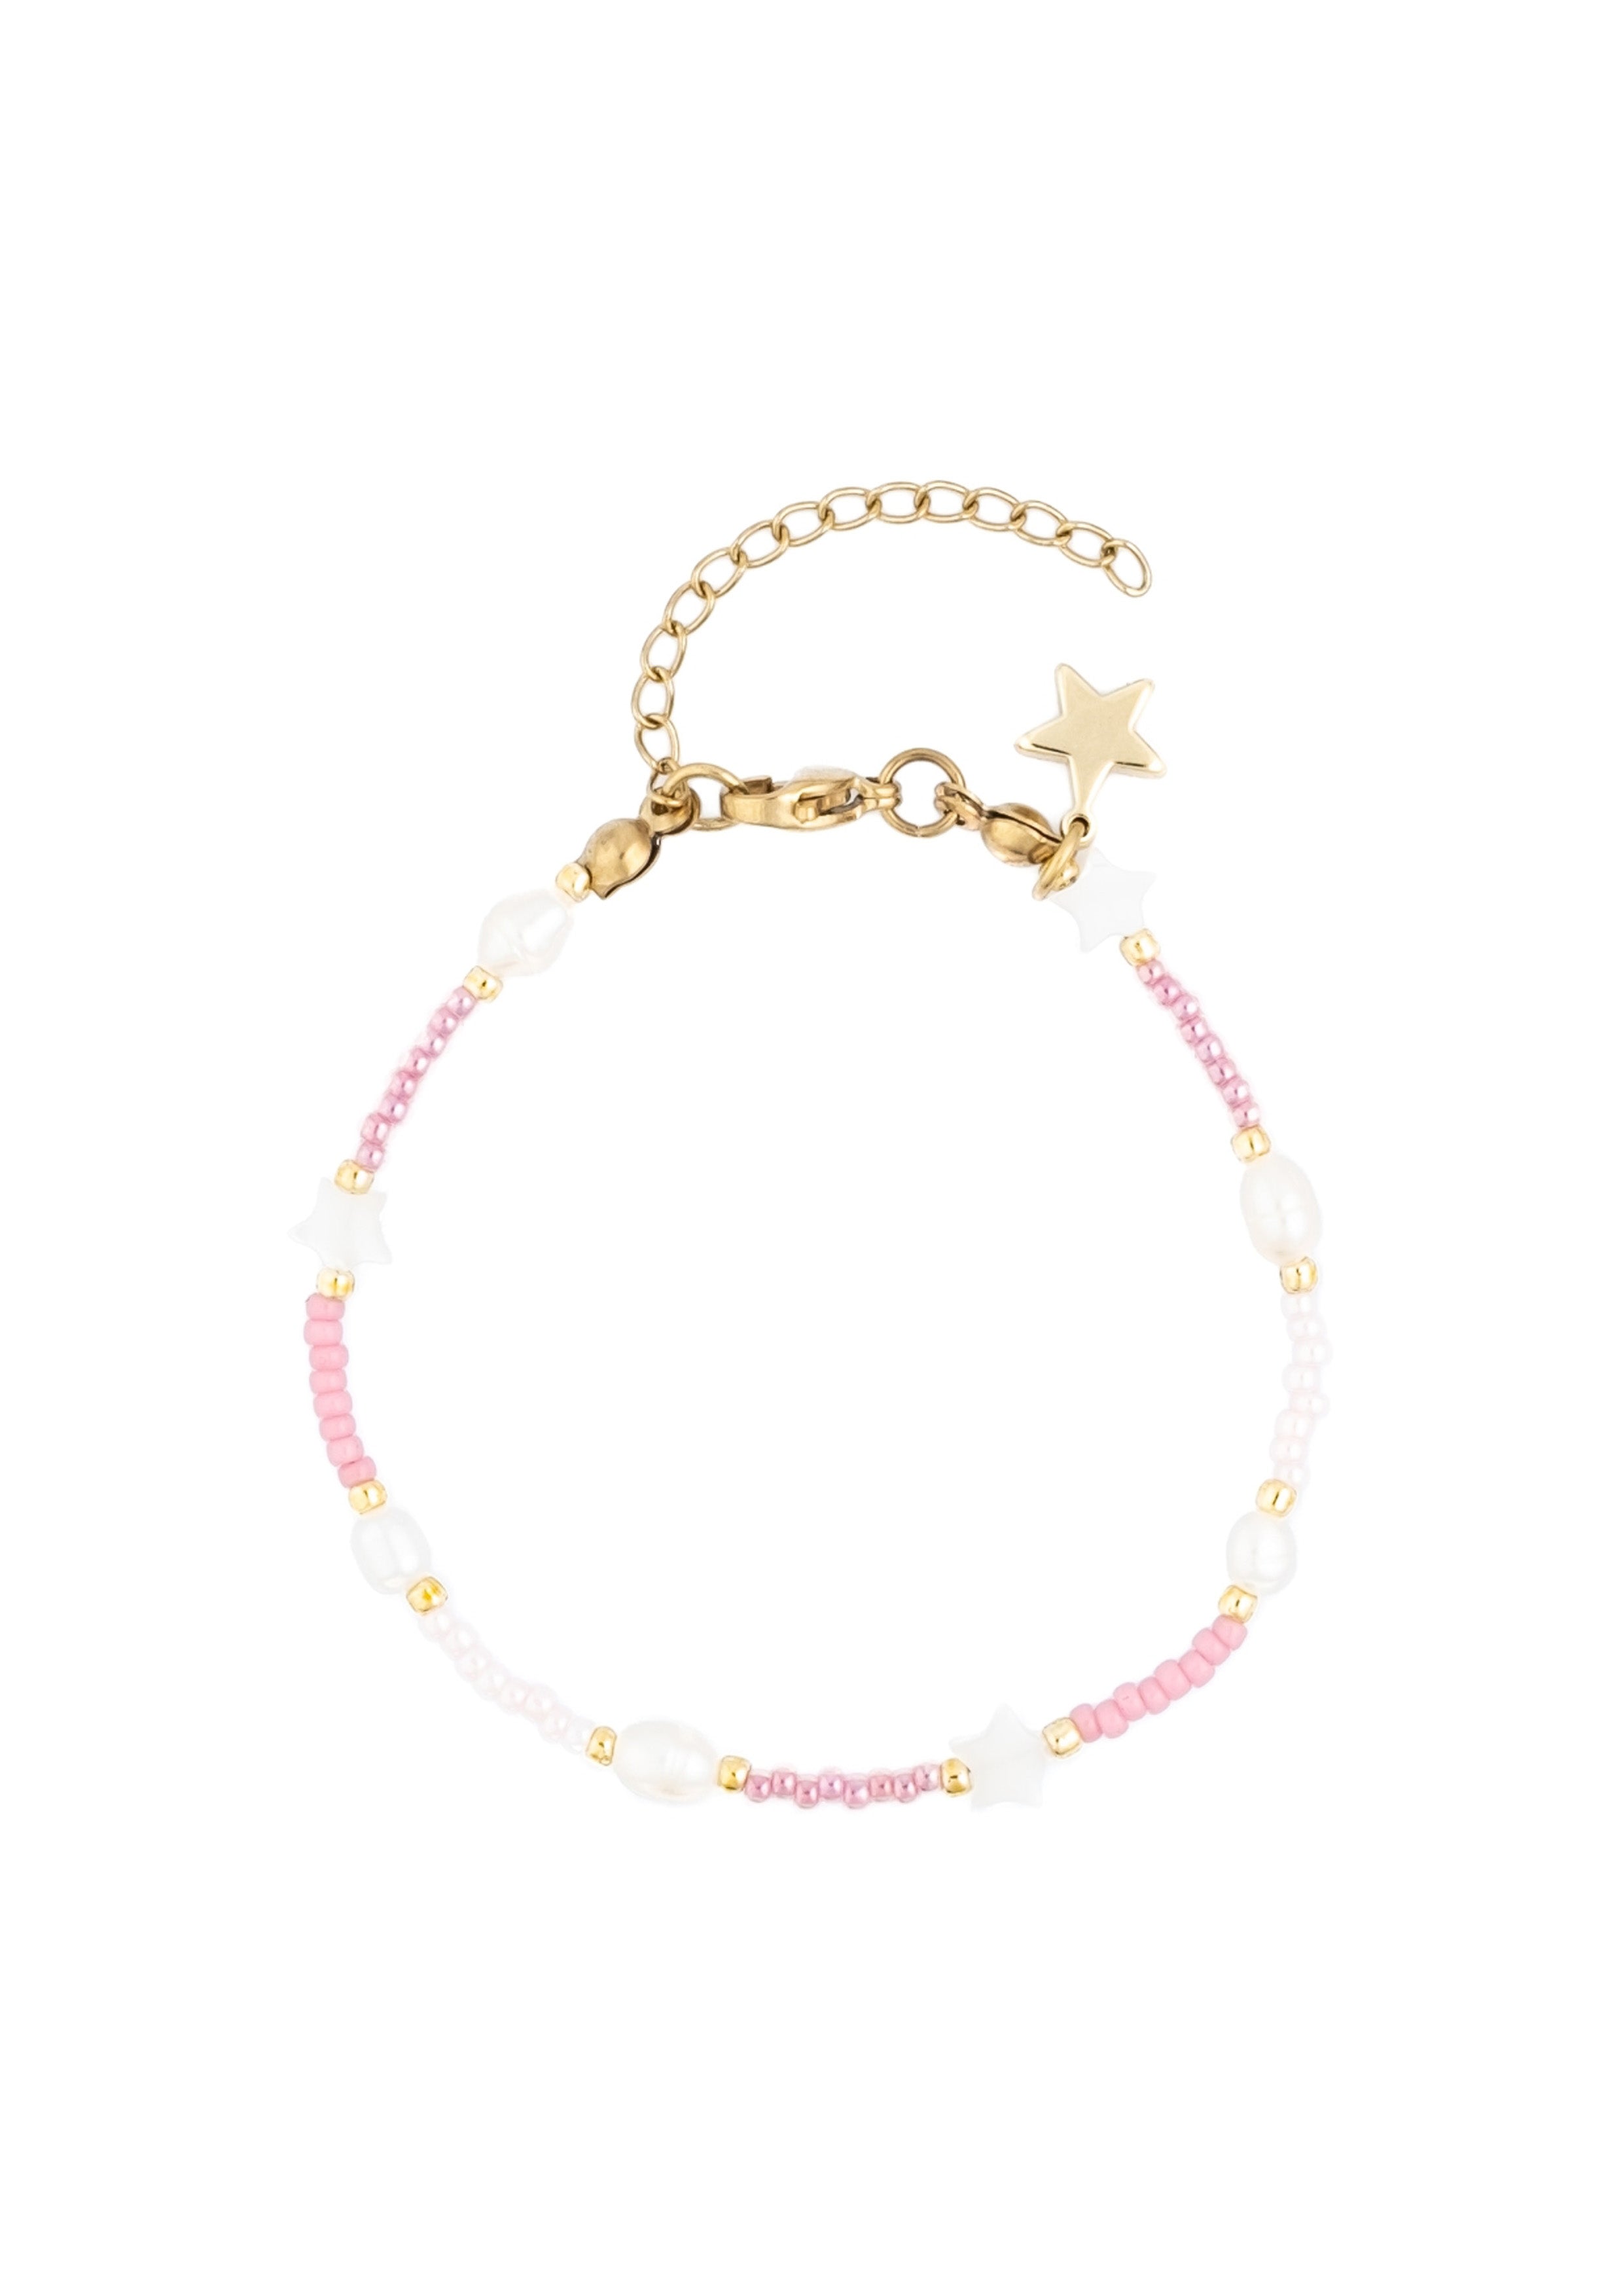 Glass Bead Bracelet w/ Mop Star & Pearls Light Rose